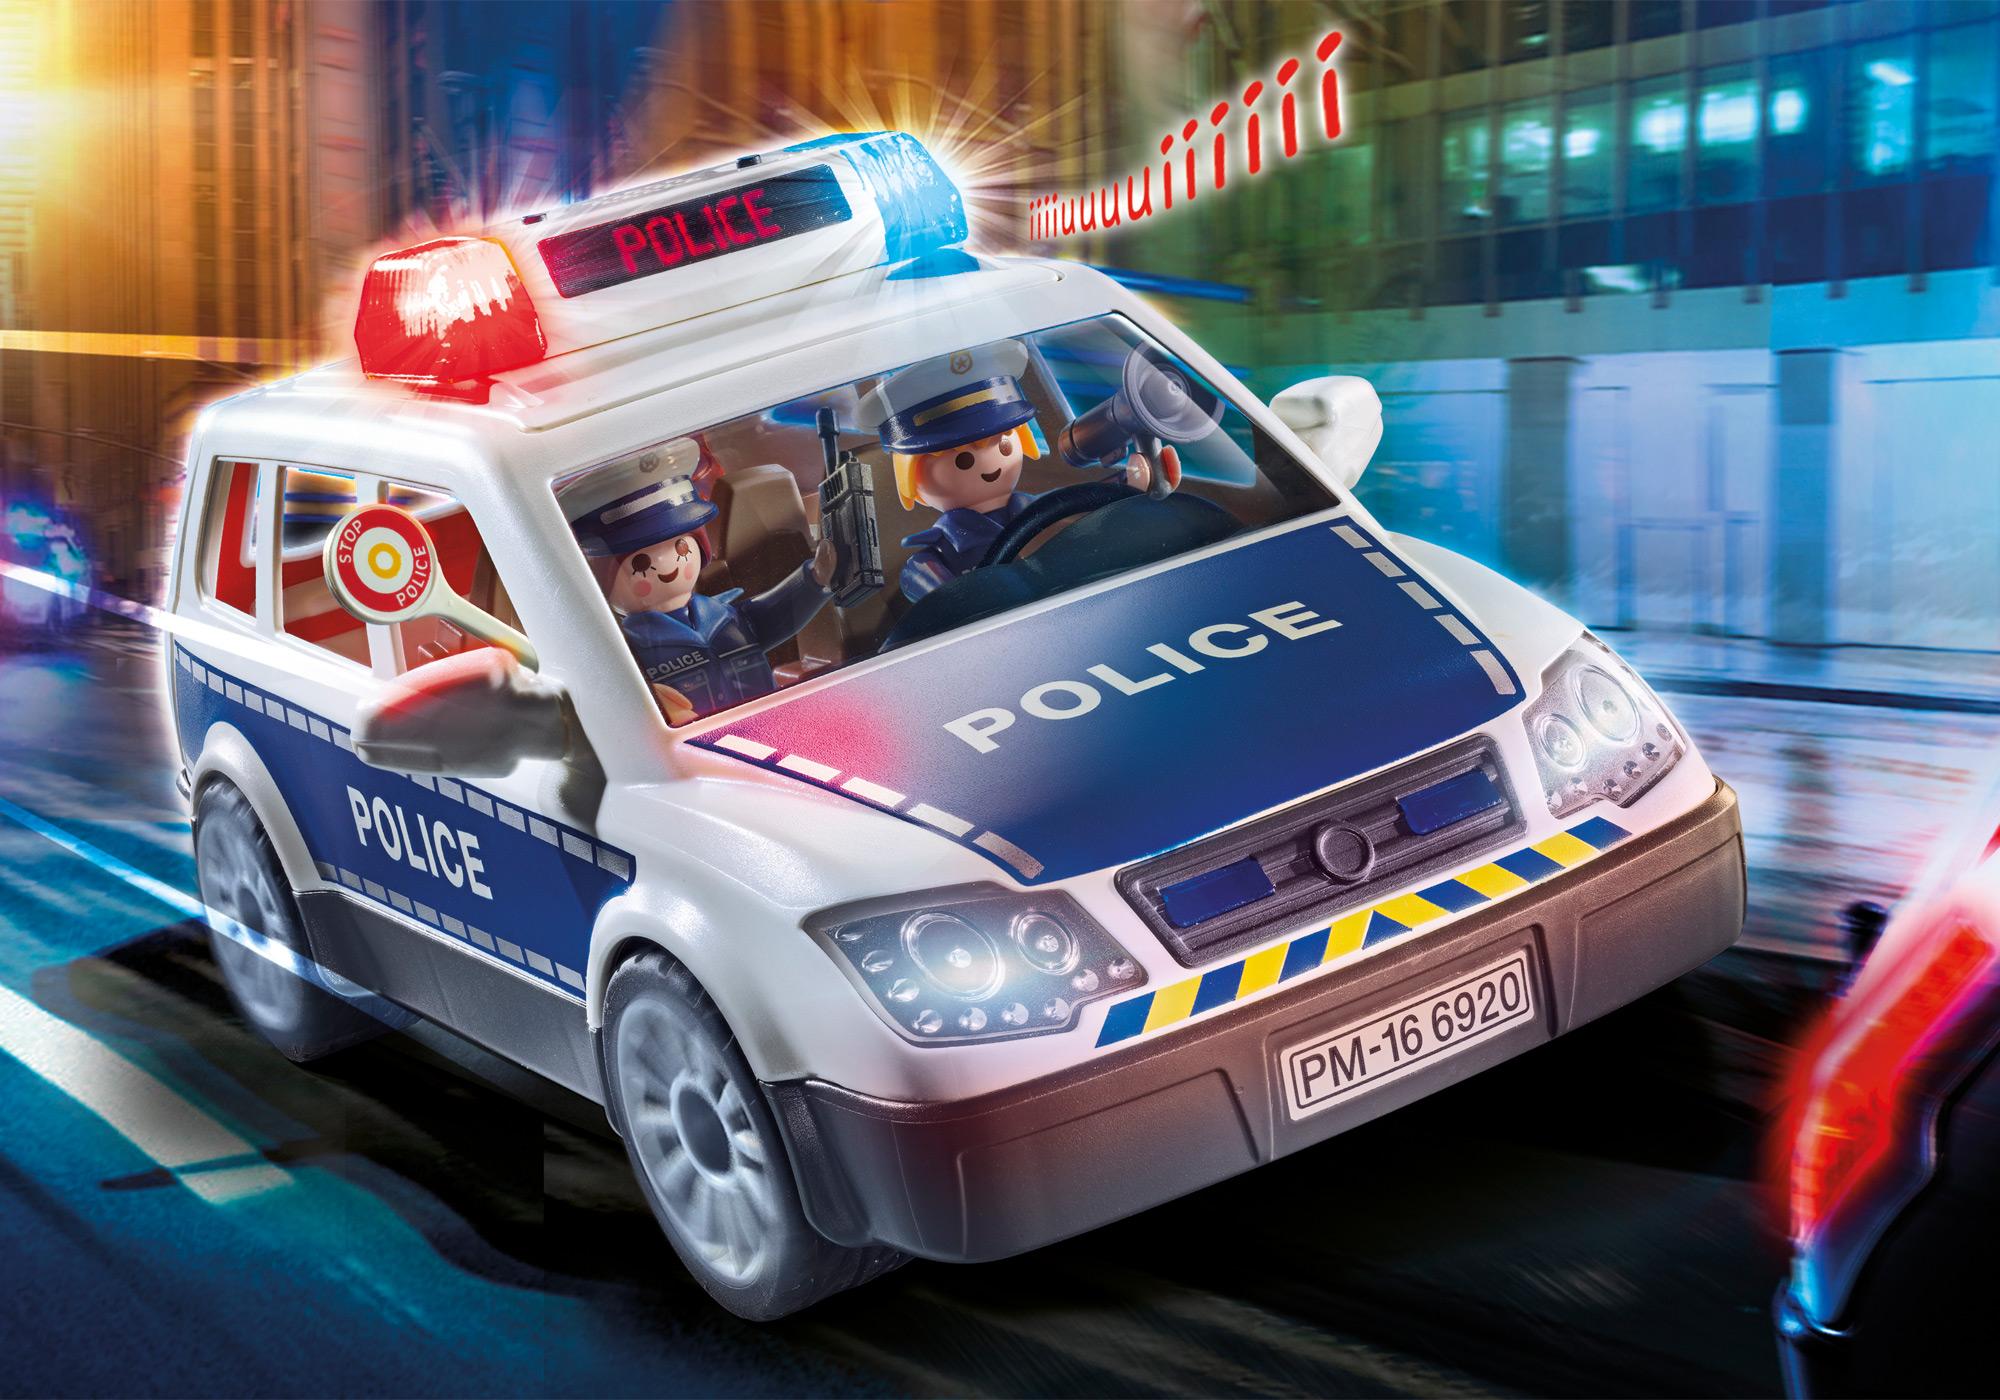 vehicule de police playmobil